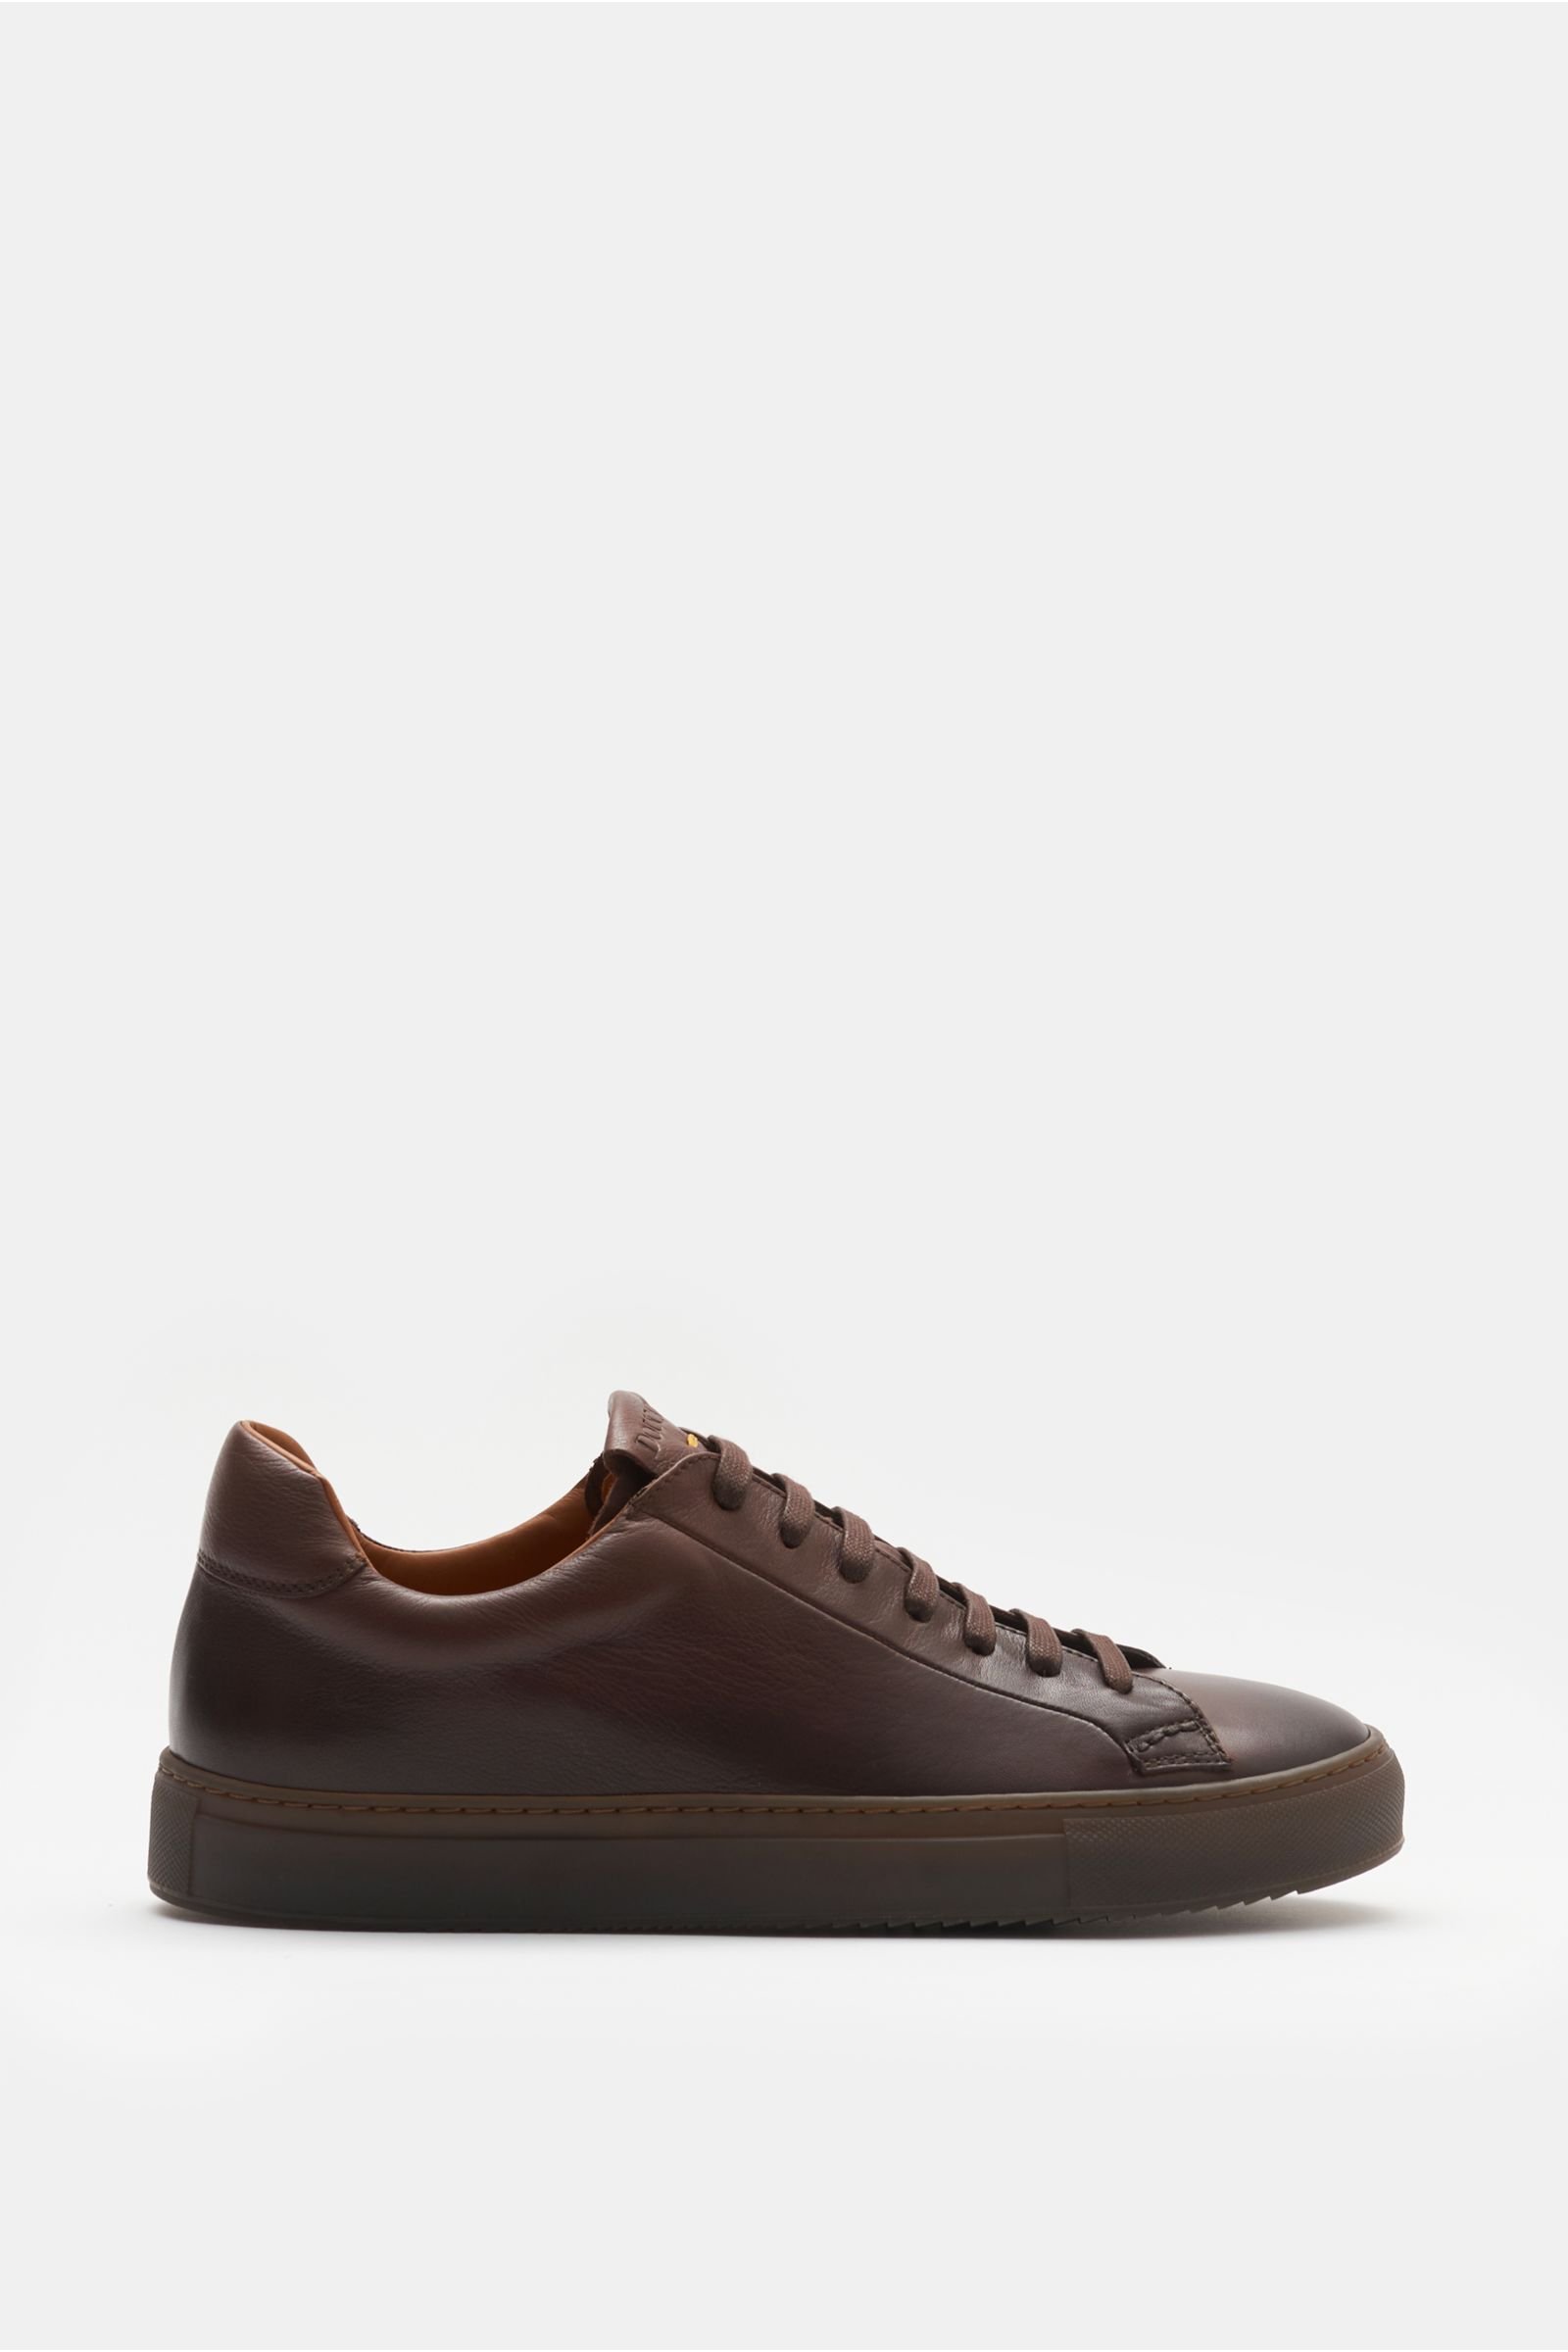 DOUCAL'S sneakers brown | BRAUN